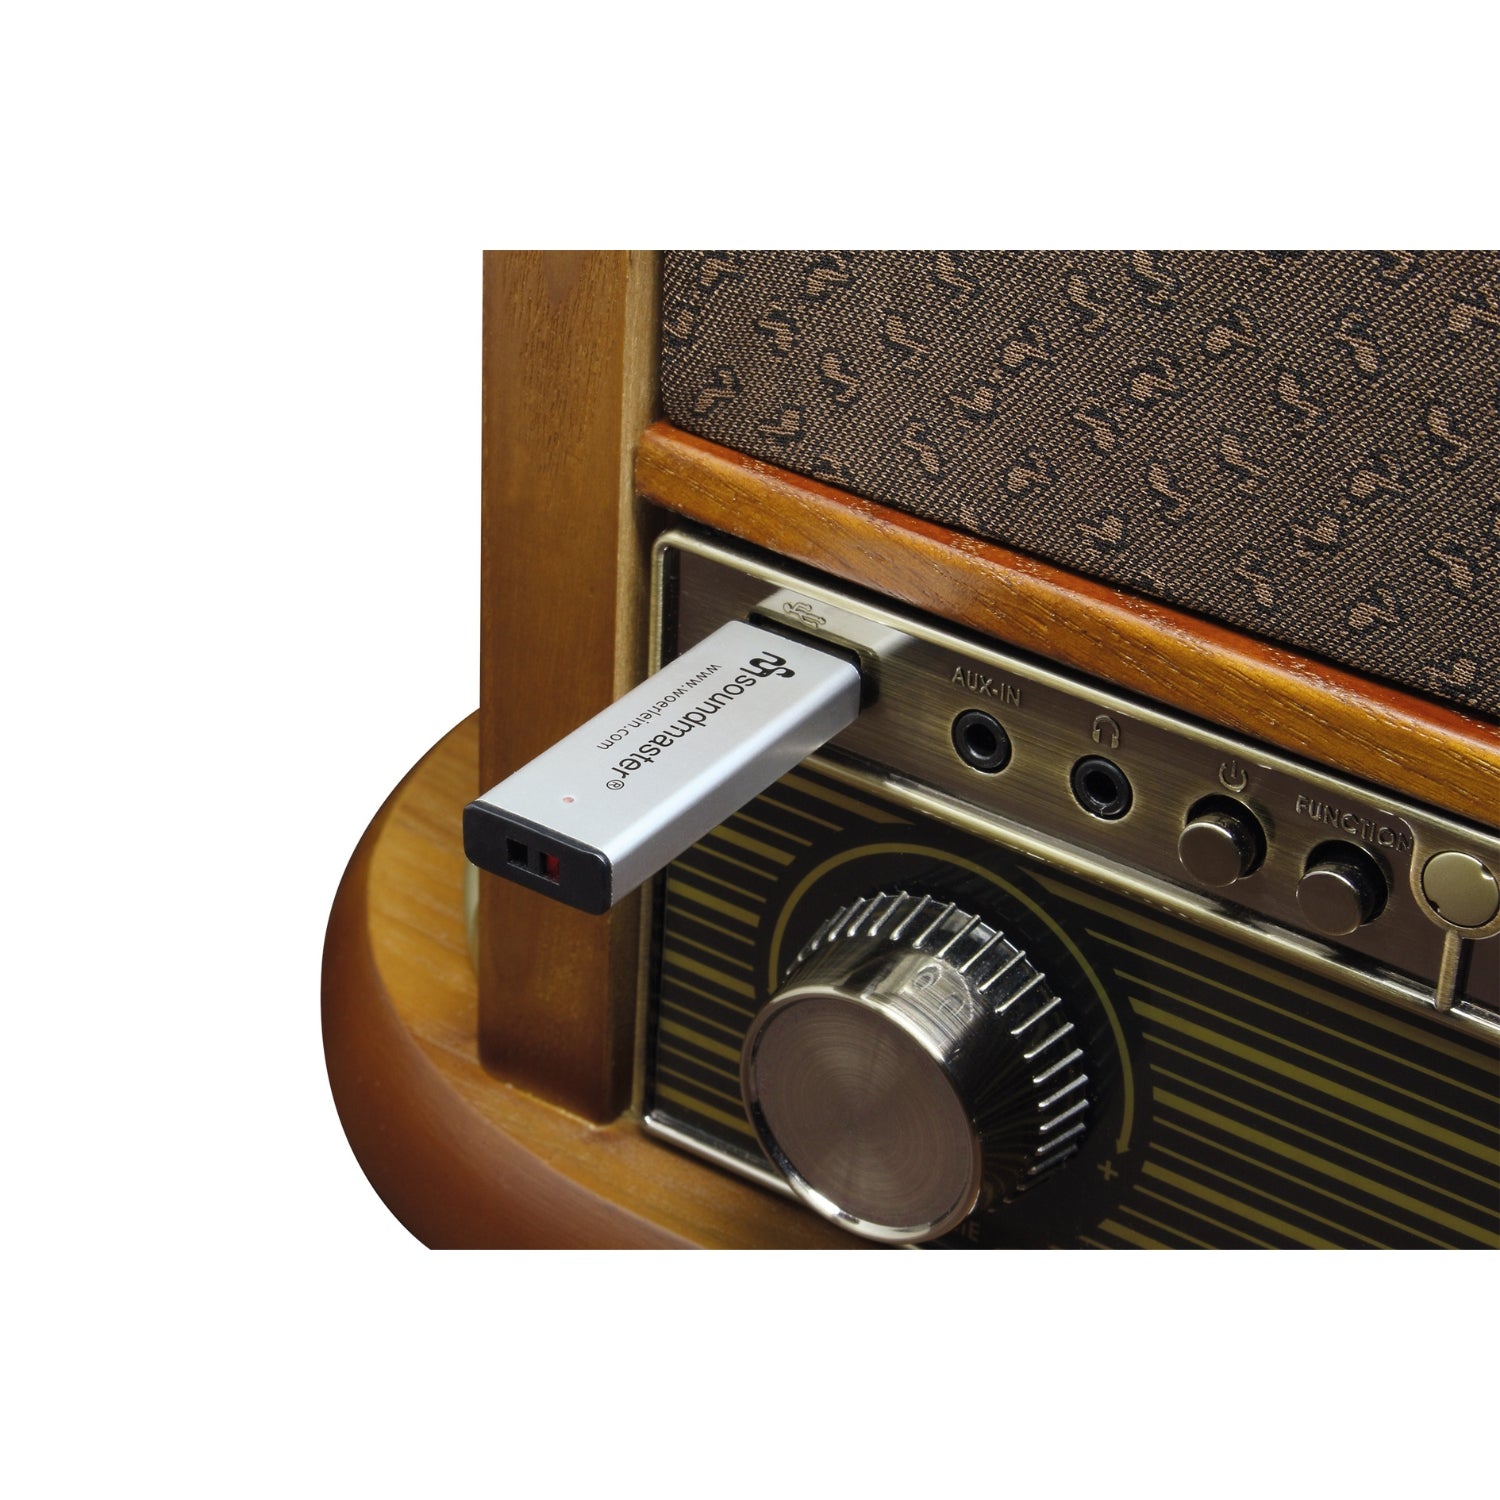 Soundmaster NR566BR 7-in-1 Nostalgie Stereoanlage mit Plattenspieler Audio Technica Magnettonabnehmer | Digitalradio DAB+ | CD-MP3 | USB | Kassette | Bluetooth | Digitalisierungs-Funktion | Equalizer